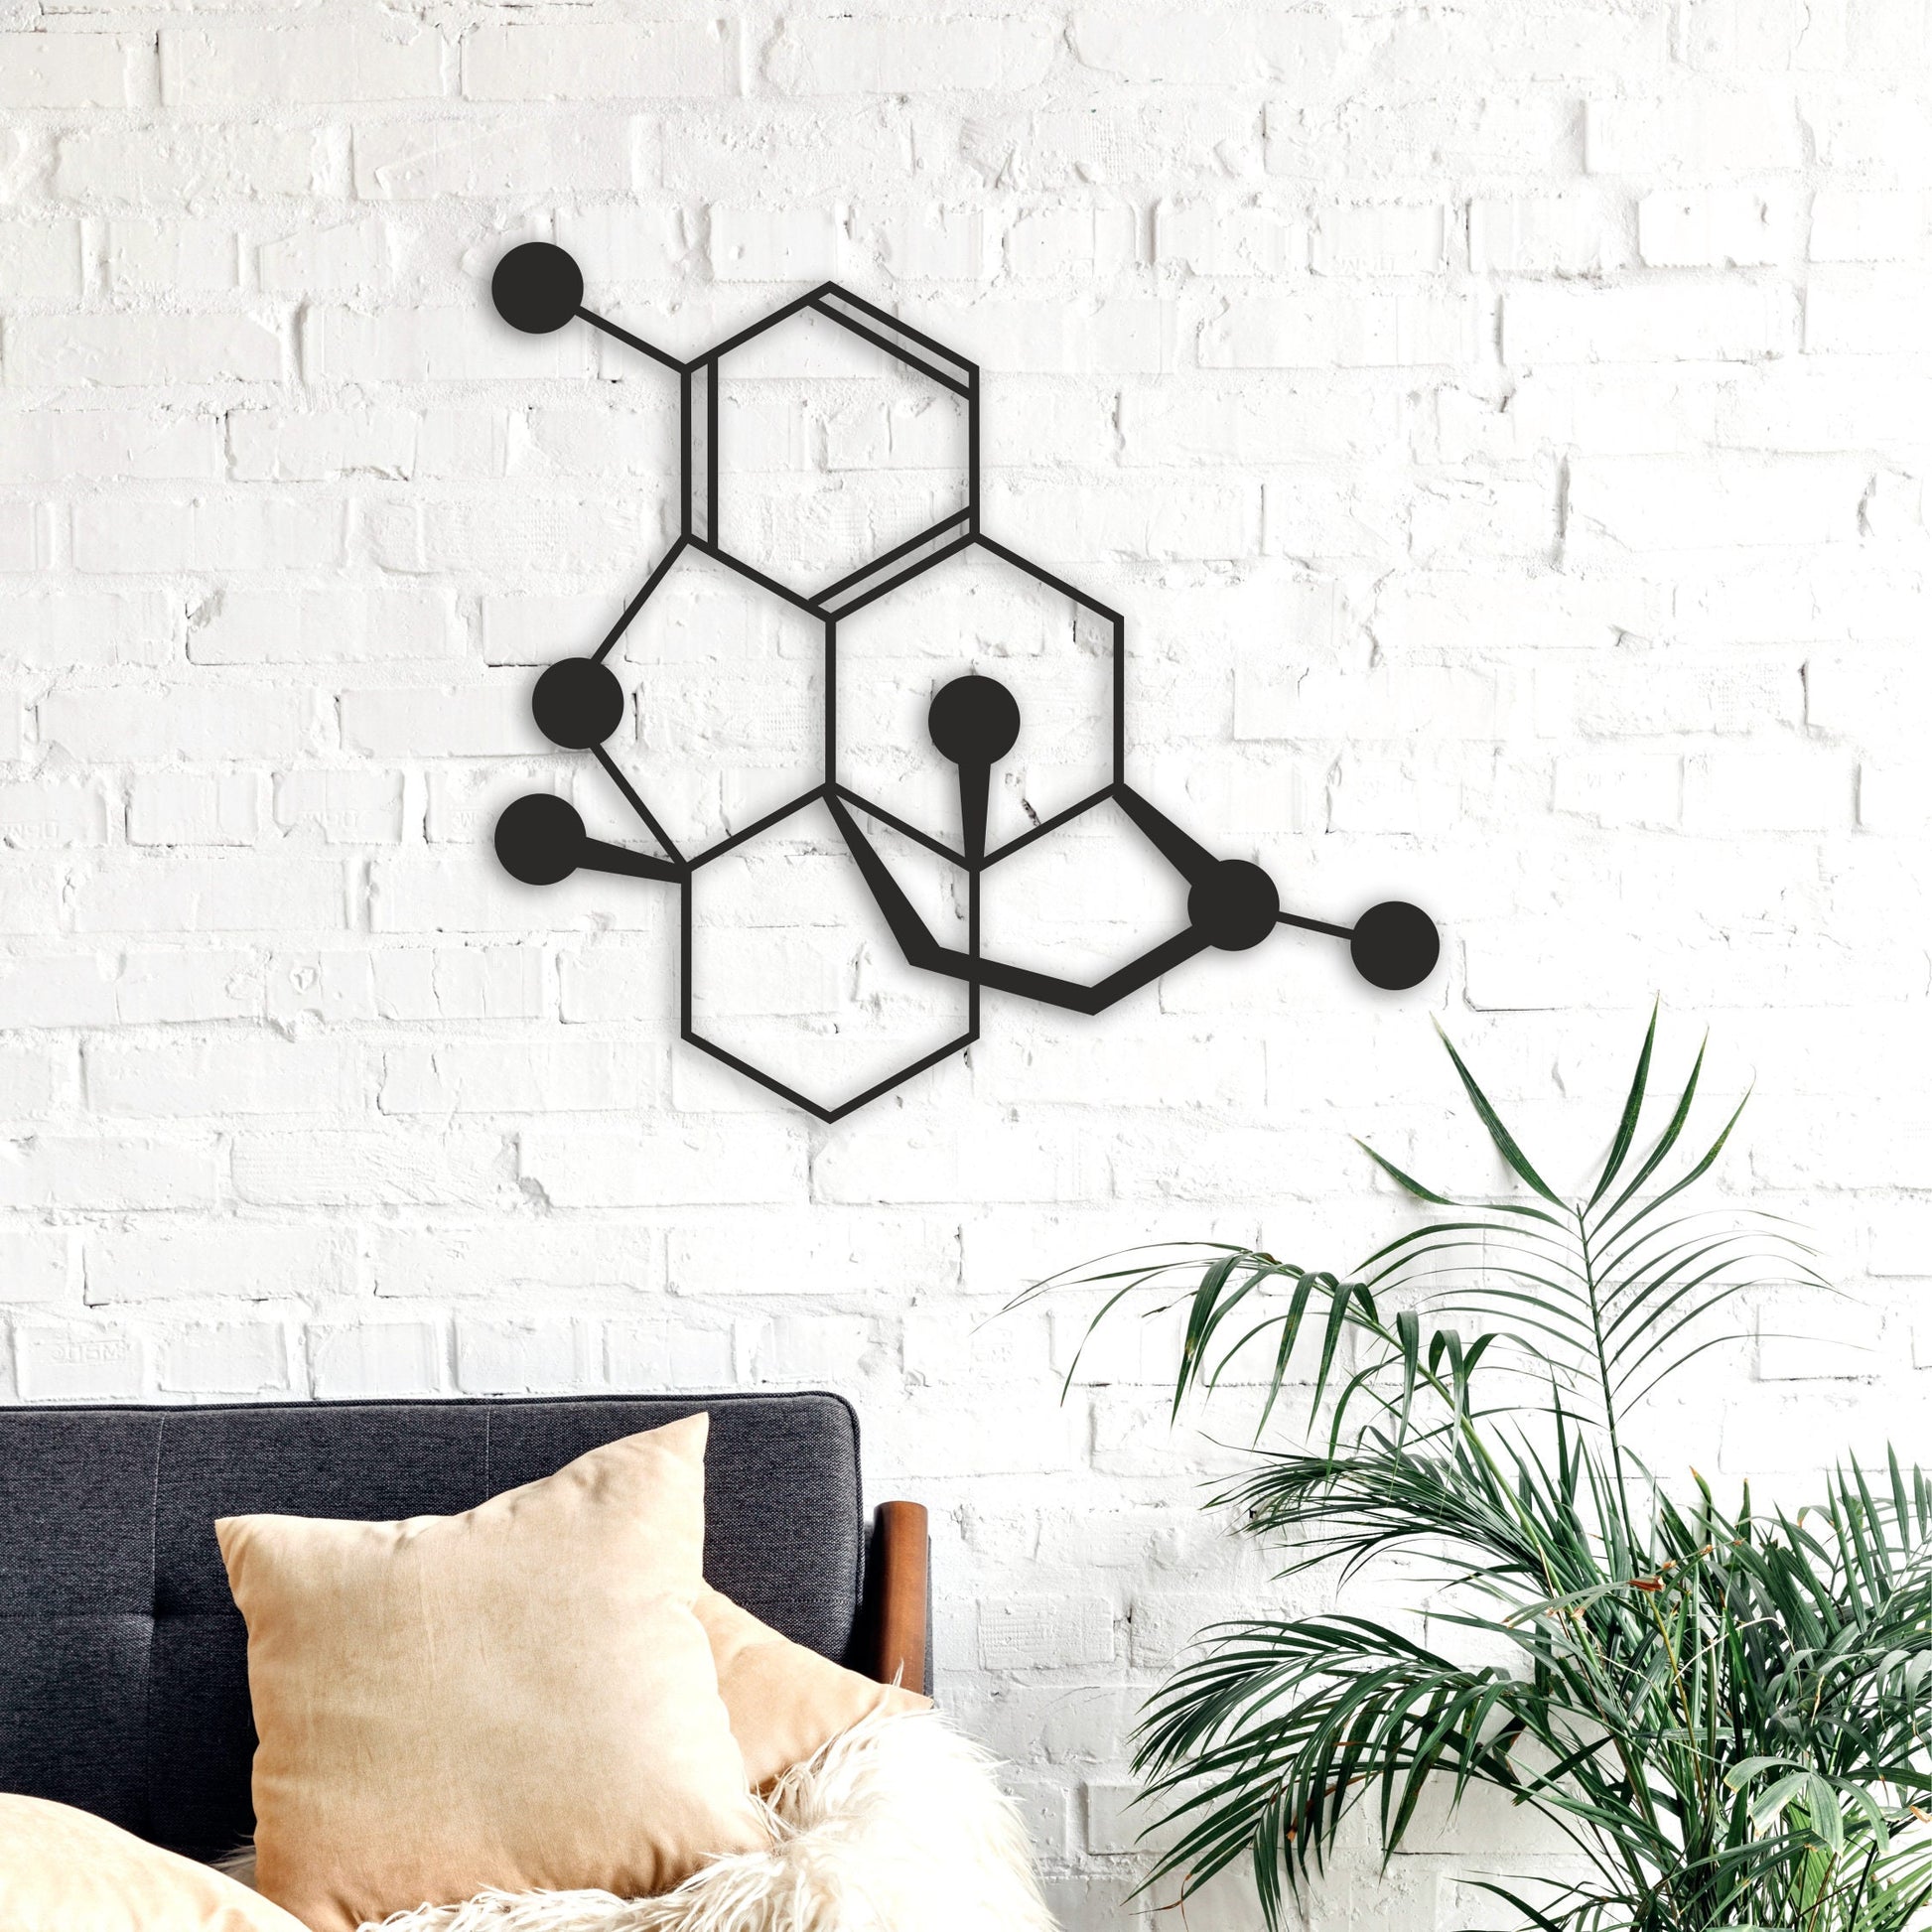 Desomorphine wall art, Chemical wall decor, Therapist office decor, Molecular structure, Wooden decor